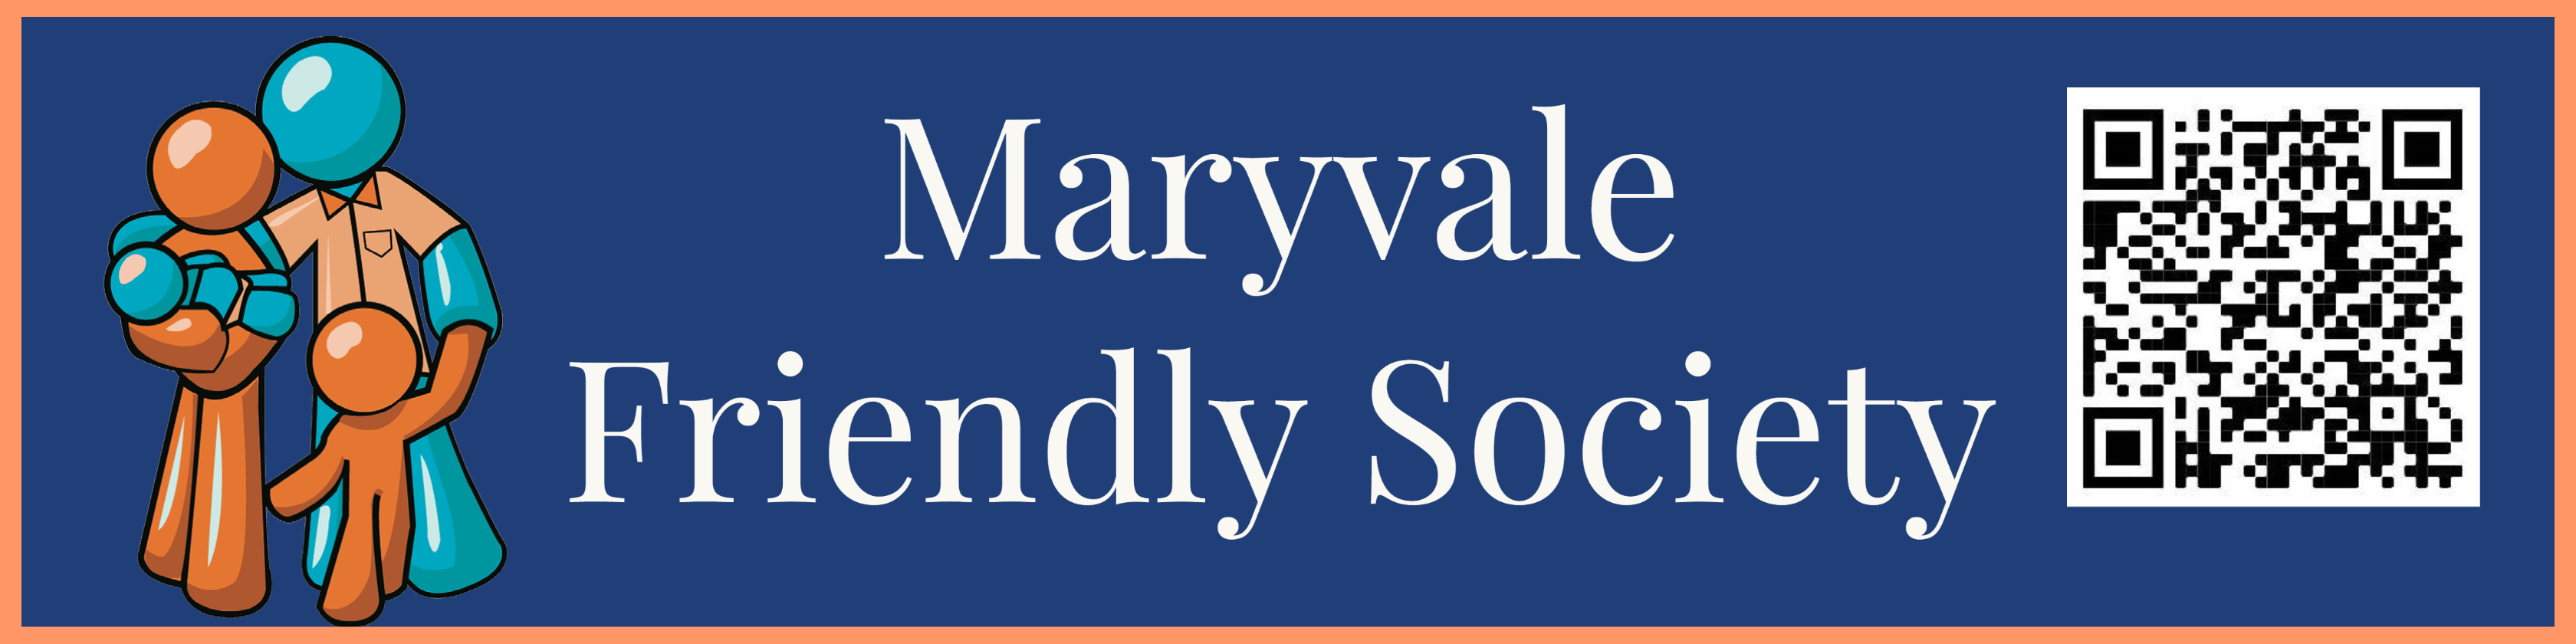 Maryvale Friendly Society